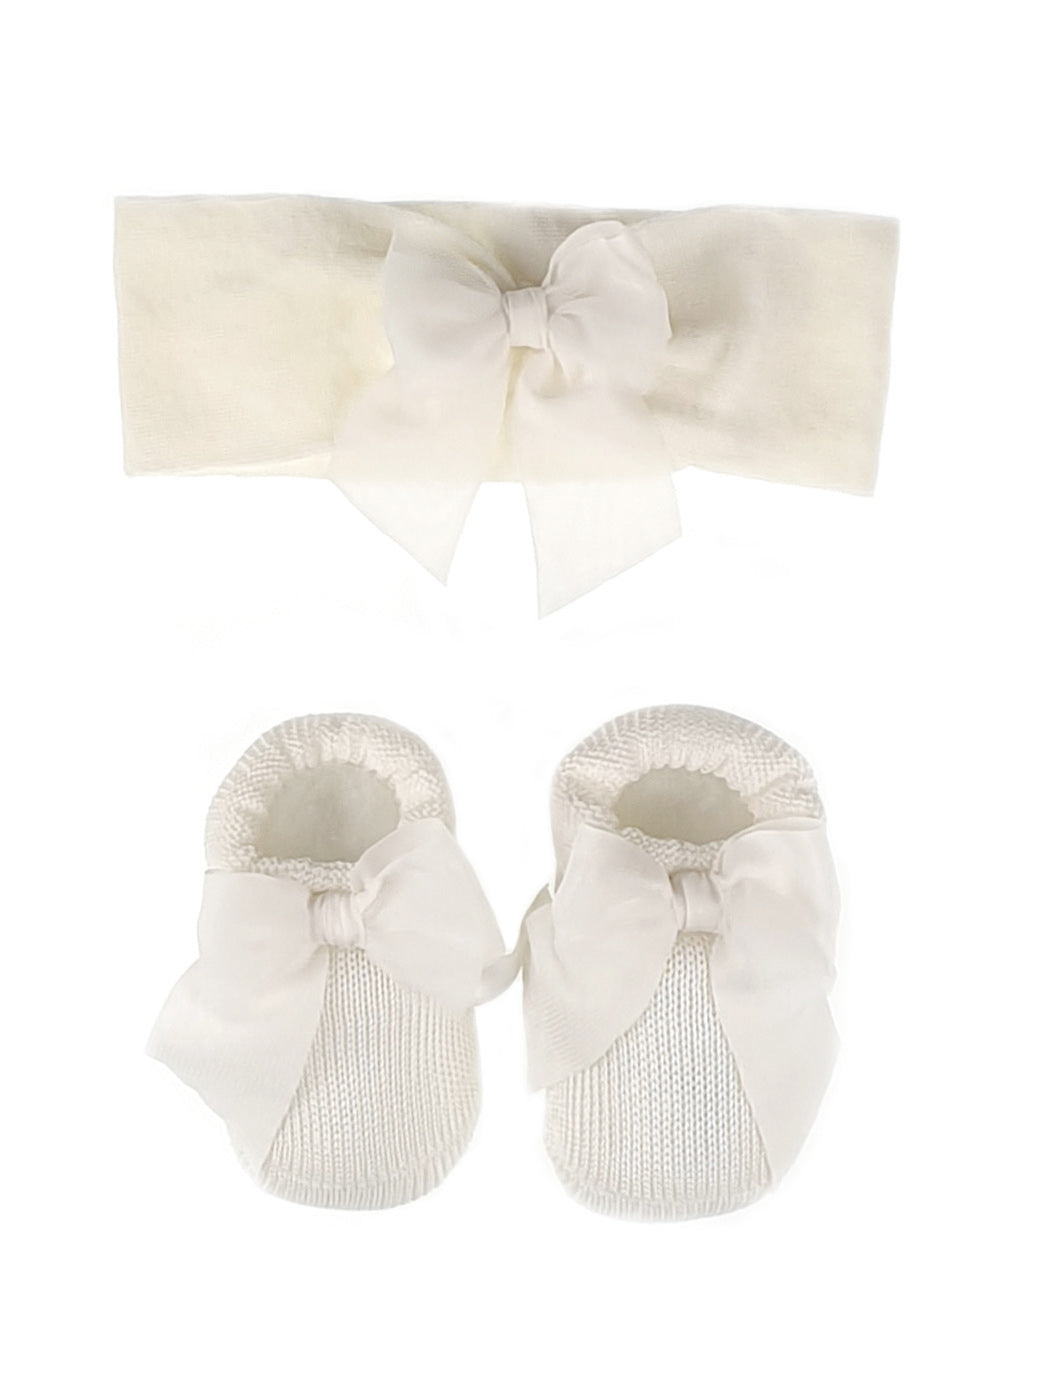 STORY LORIS - Baby Girls ivory Headband & Booties Gift Set-21152